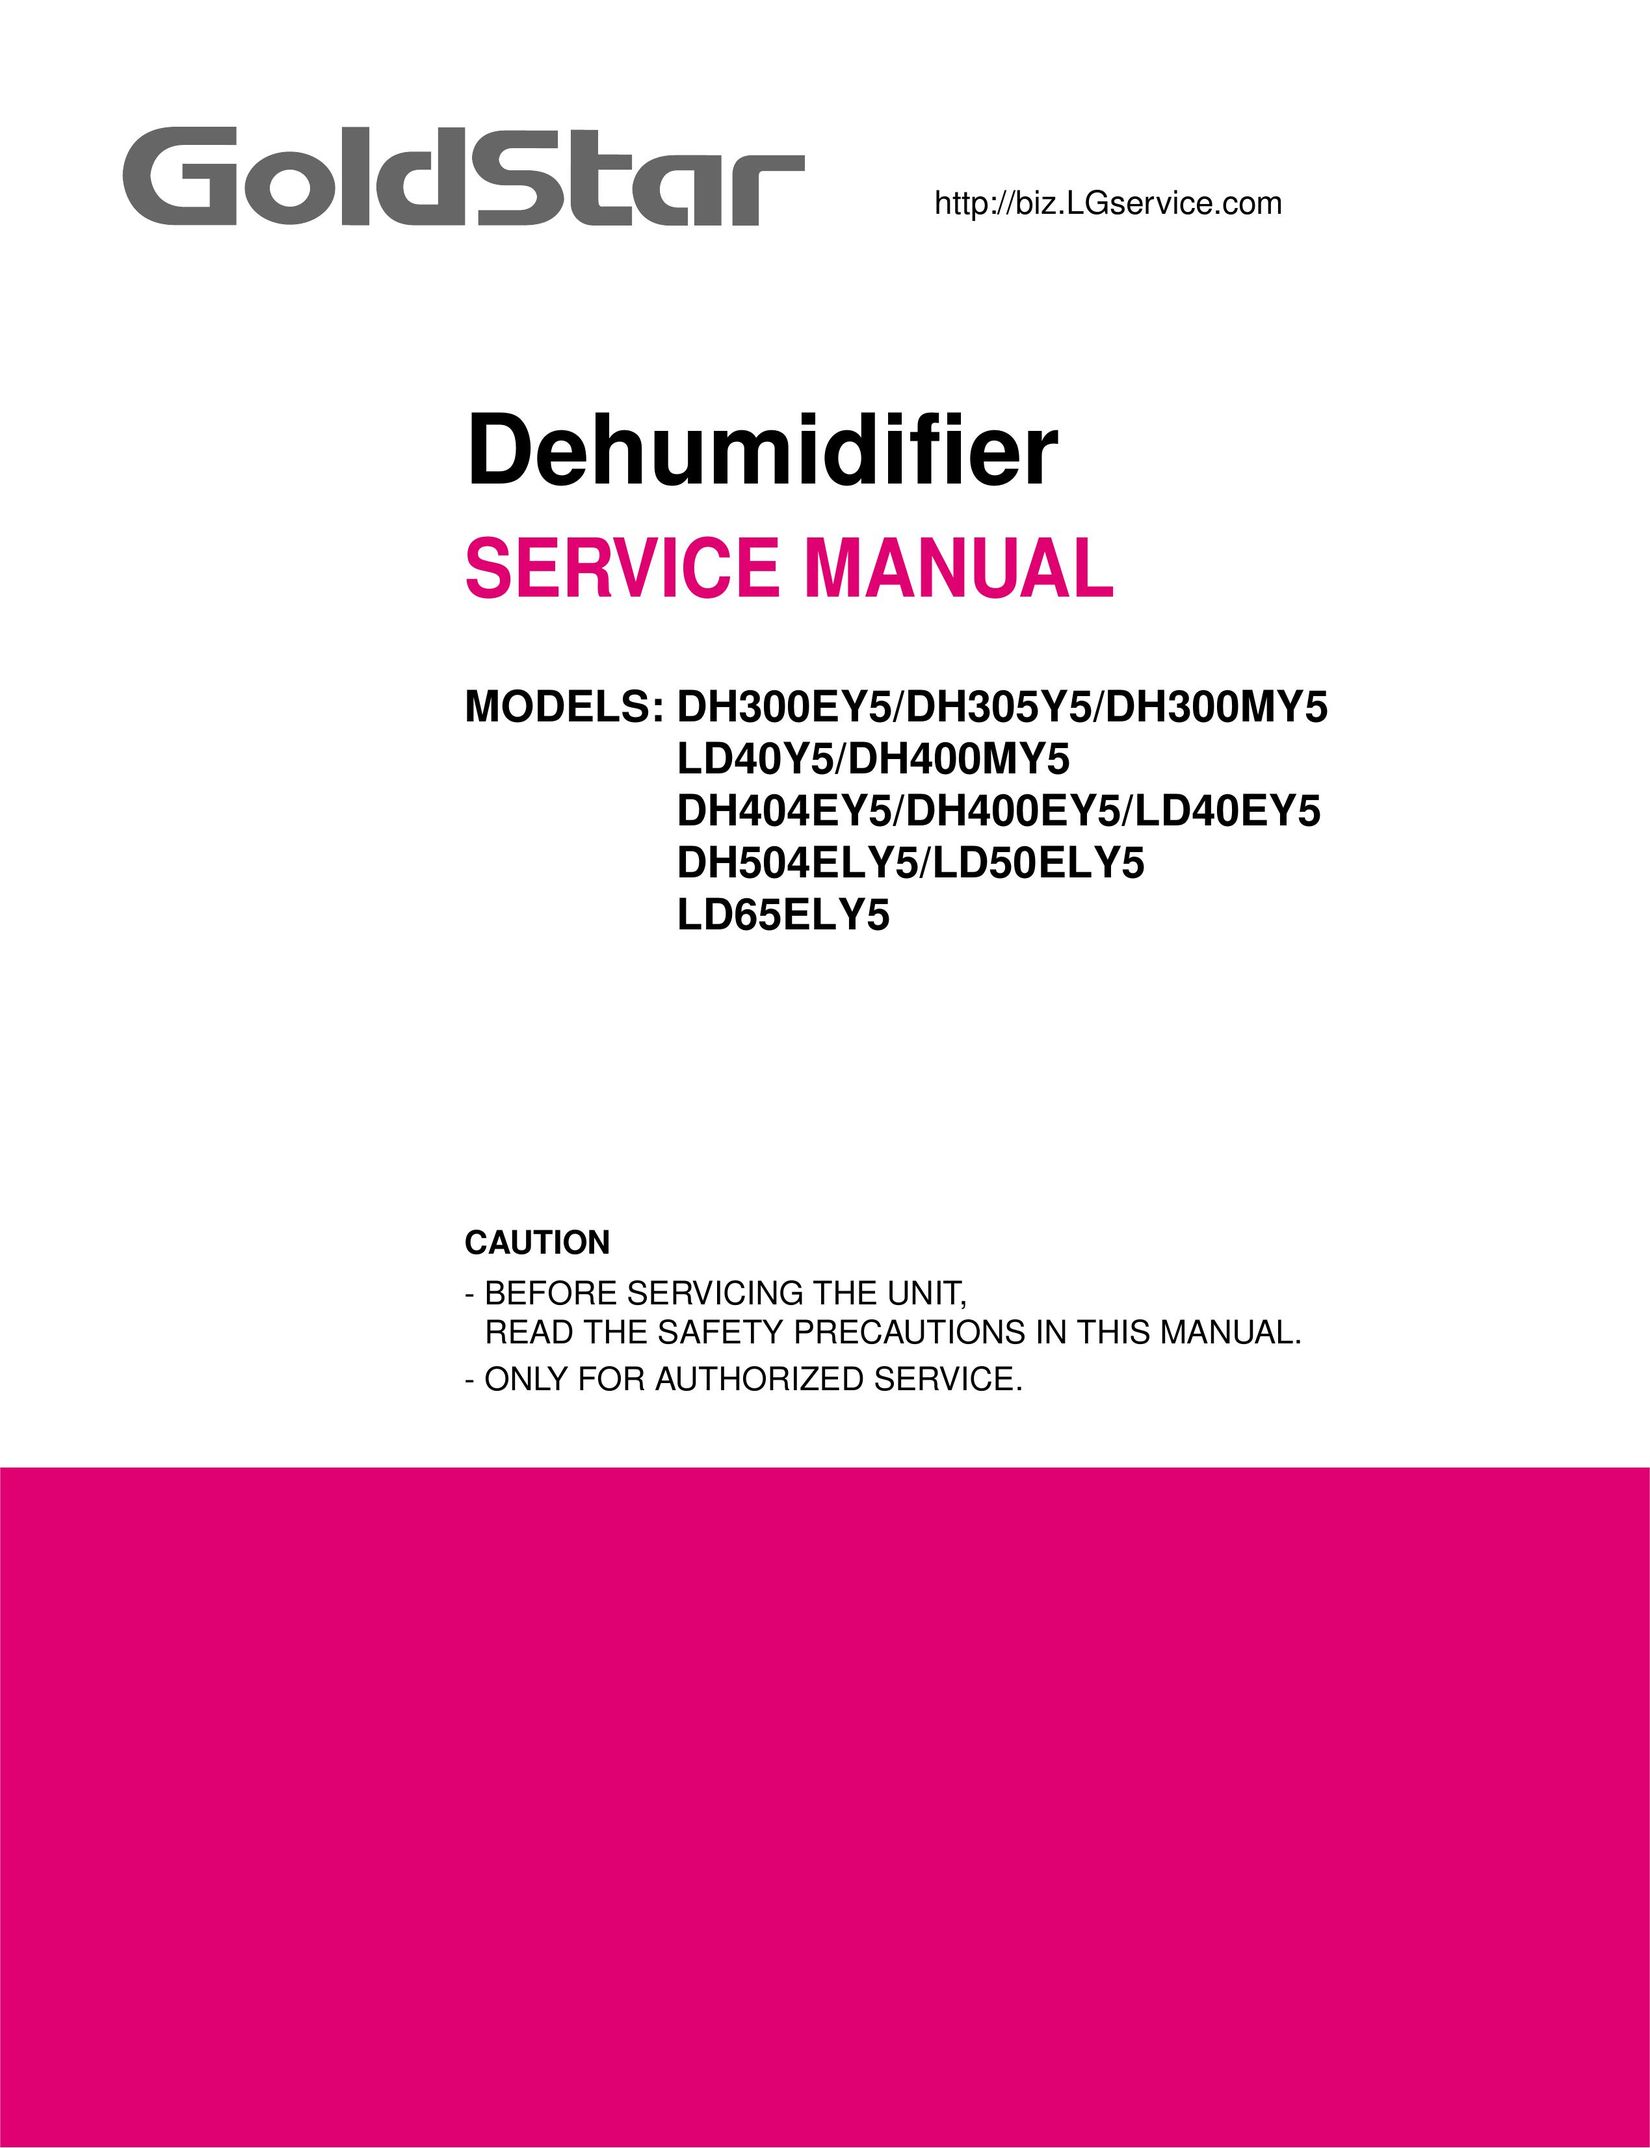 Frigidaire DH400MY5 Dehumidifier User Manual